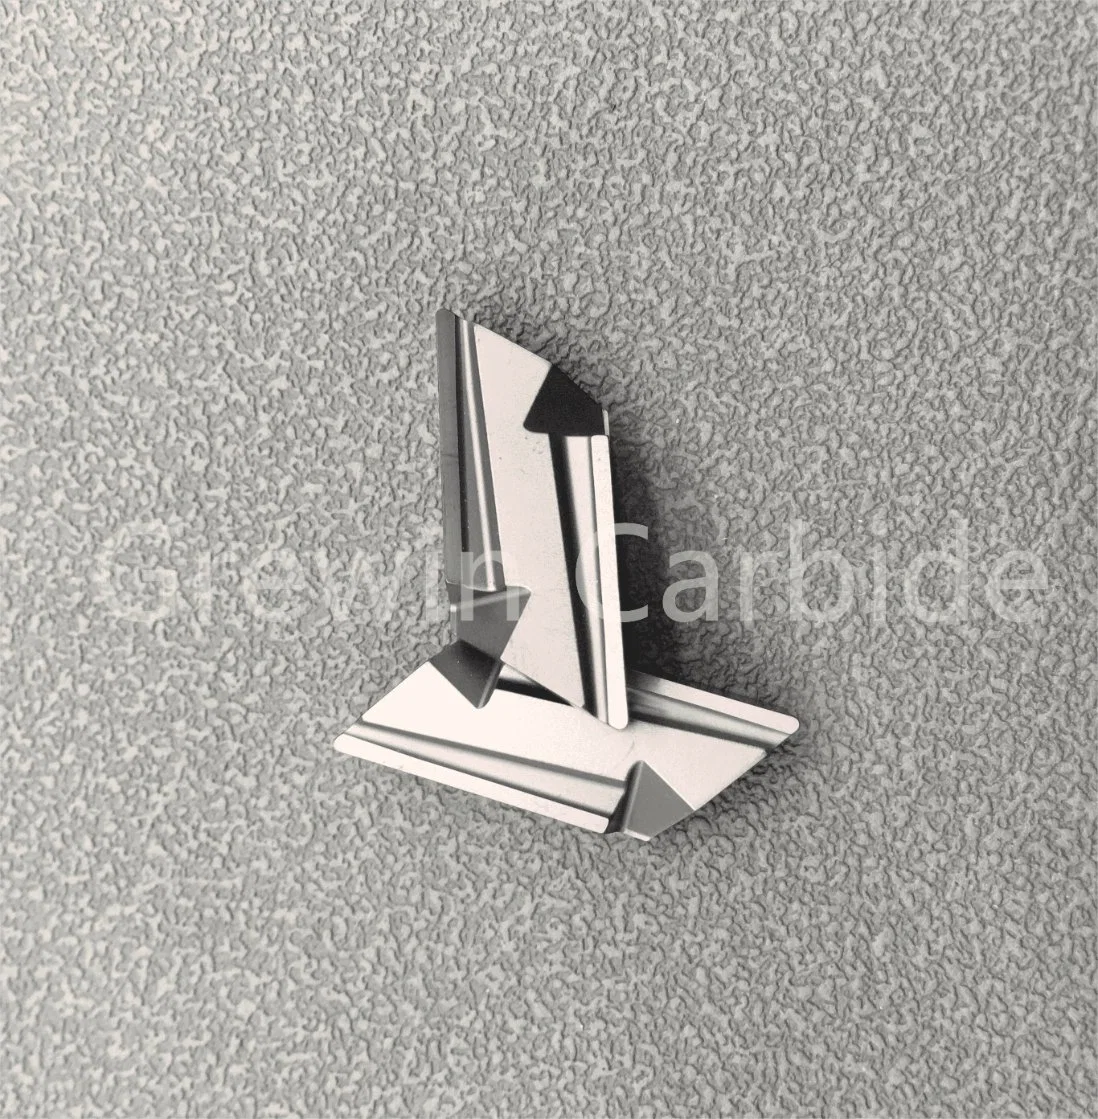 Grewin High Quality Tools Tungsten Carbide Tools CNC Machining Carbide Insert Knux060405r Cutting Tools